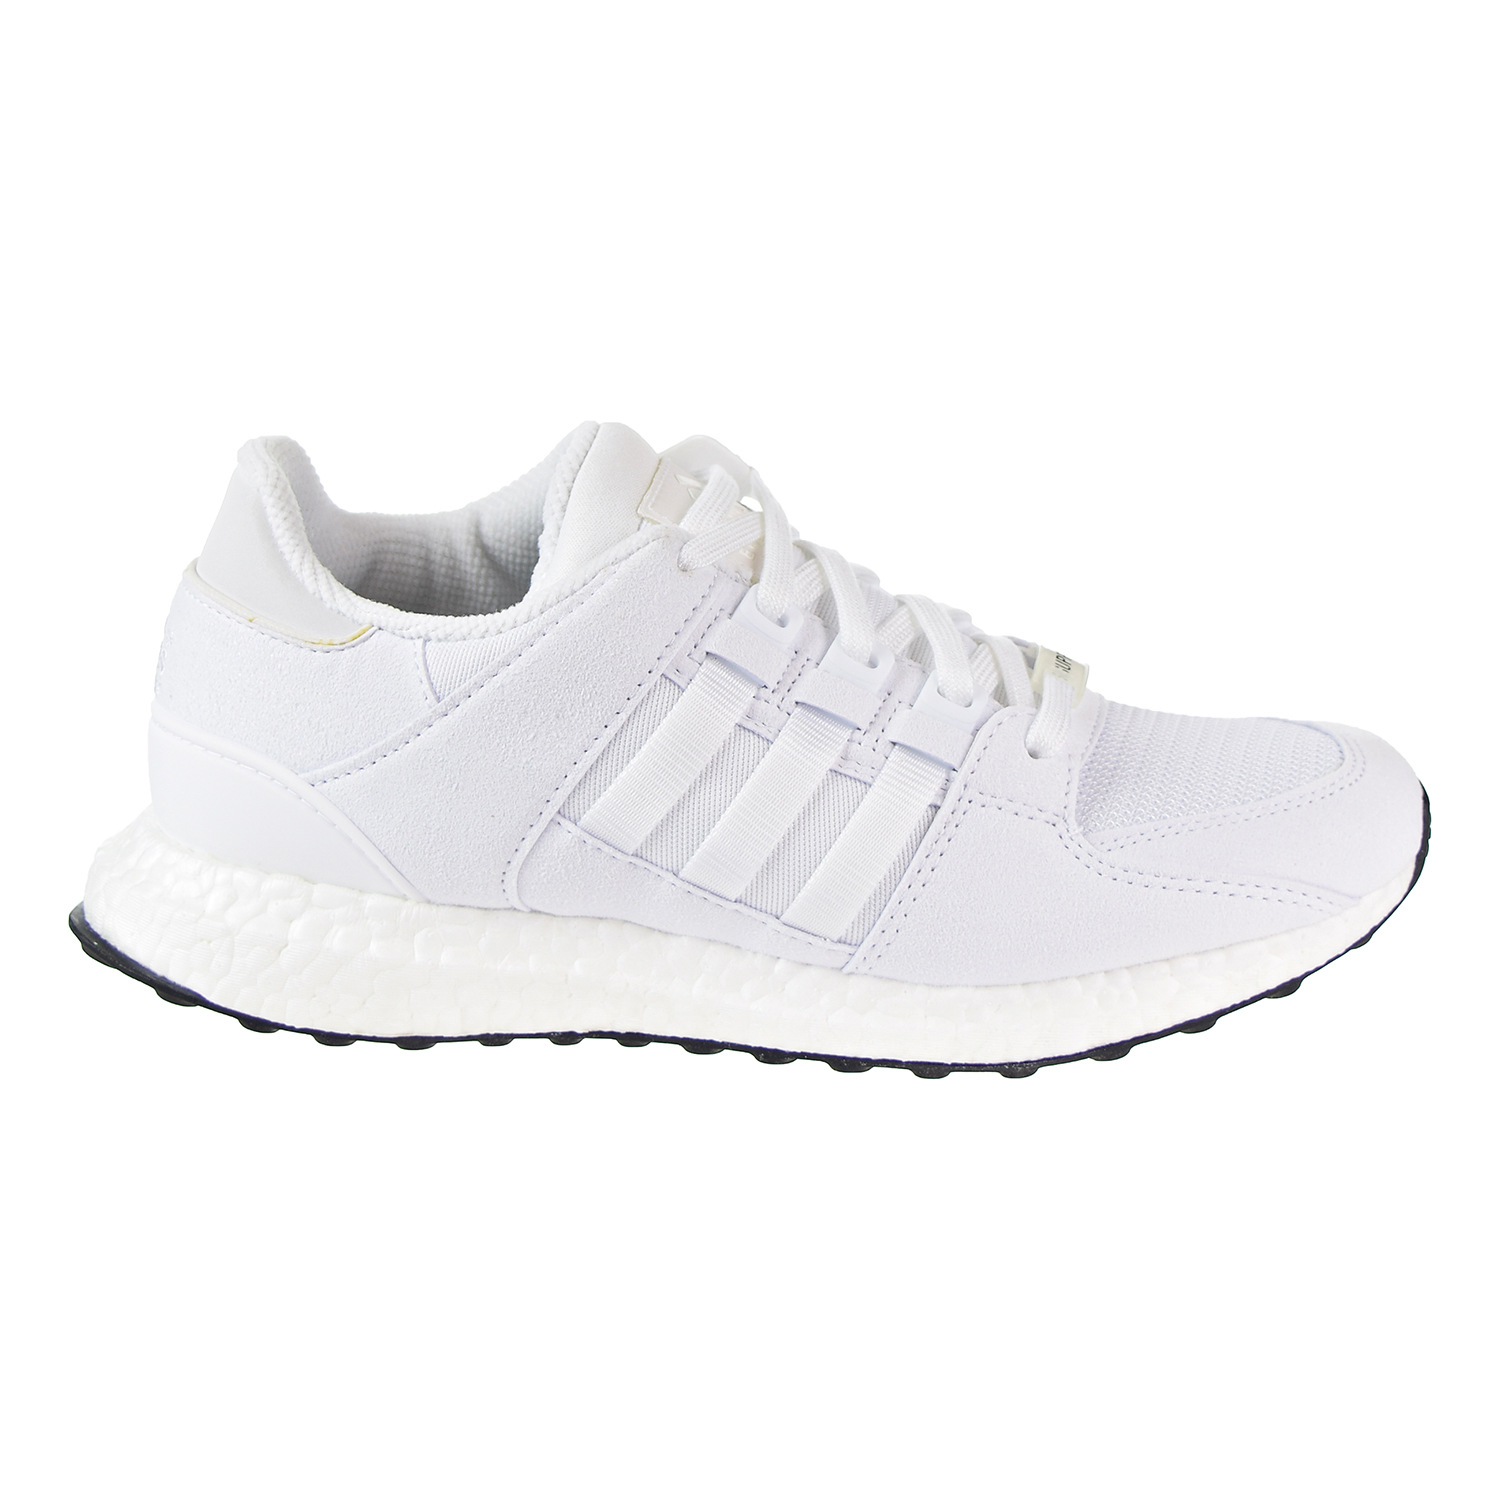 Adidas Equipment Support 93-16 Men's Shoes White S79921 | eBay